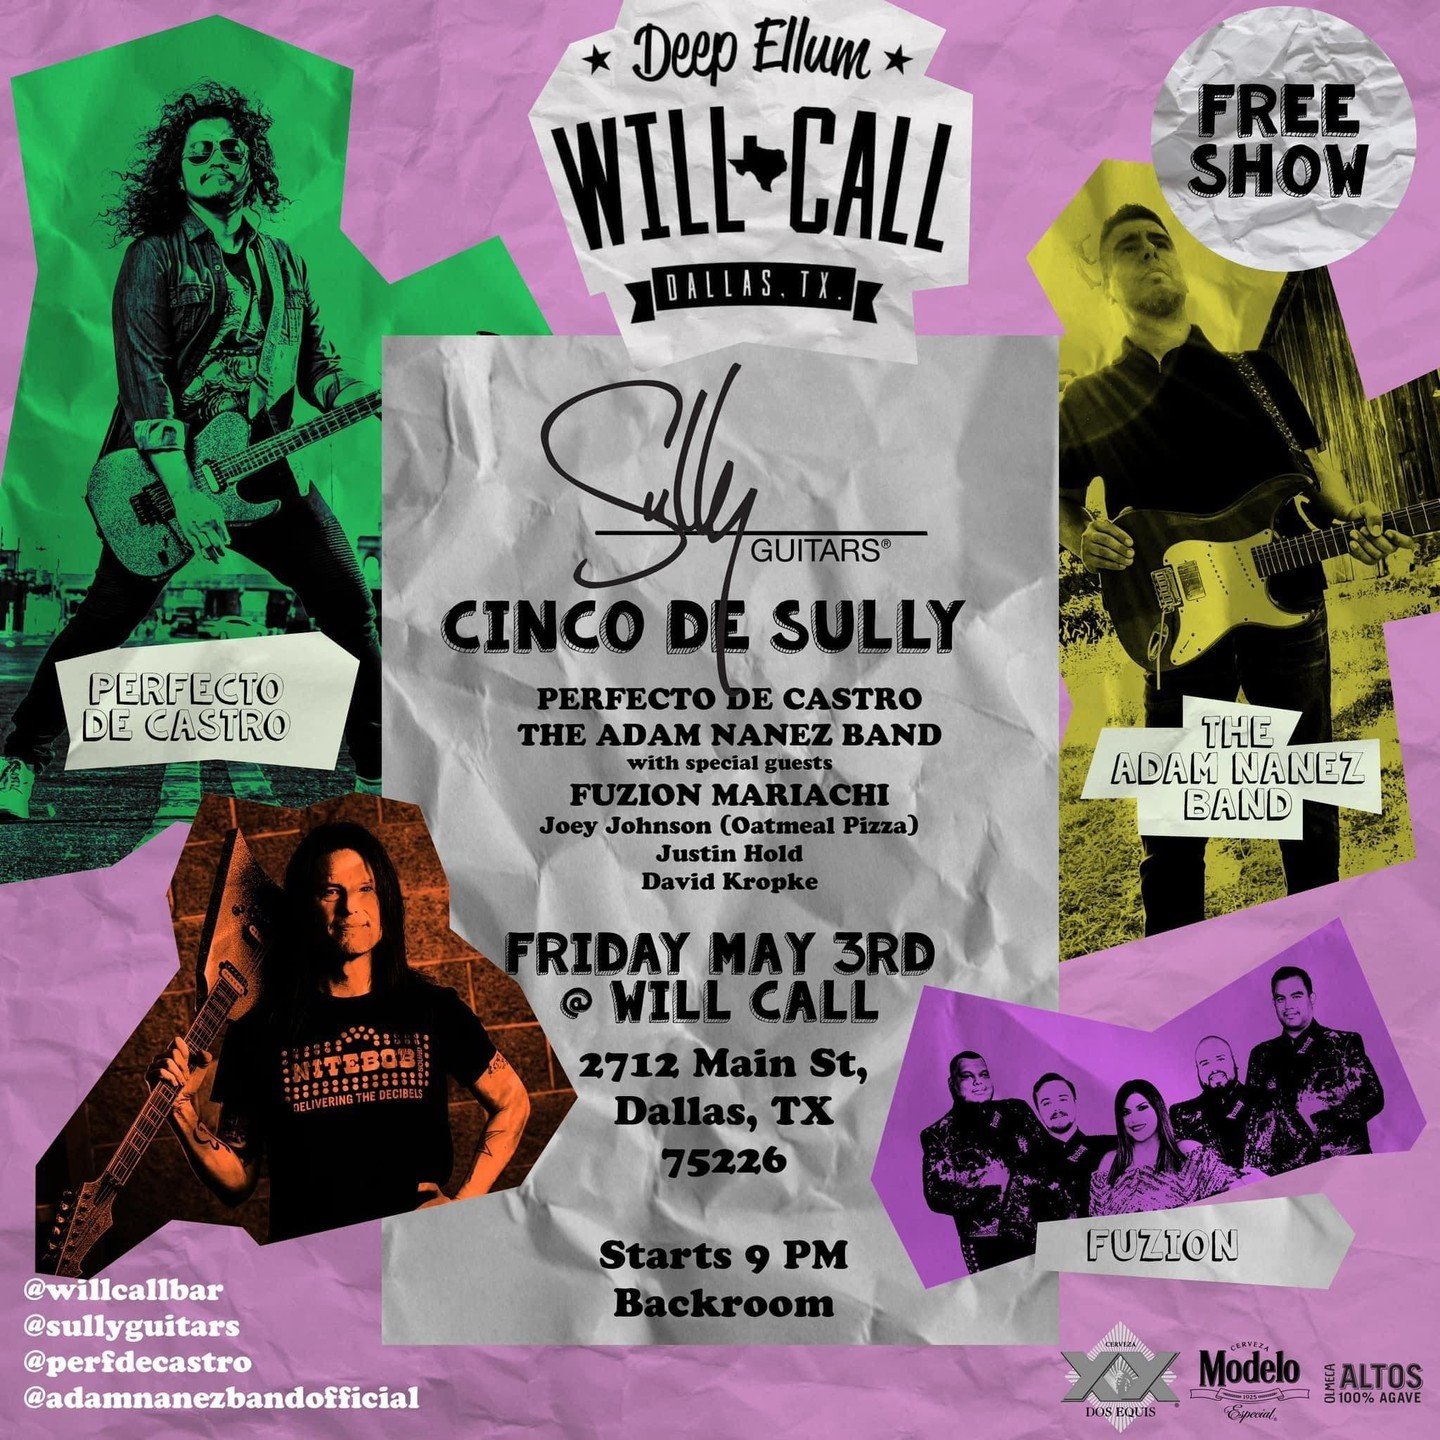 Cinco de Sully is BACK. This Friday, free entry. Come hang! 

@perfdecastro @adamnanezbandofficial @neweramariachi